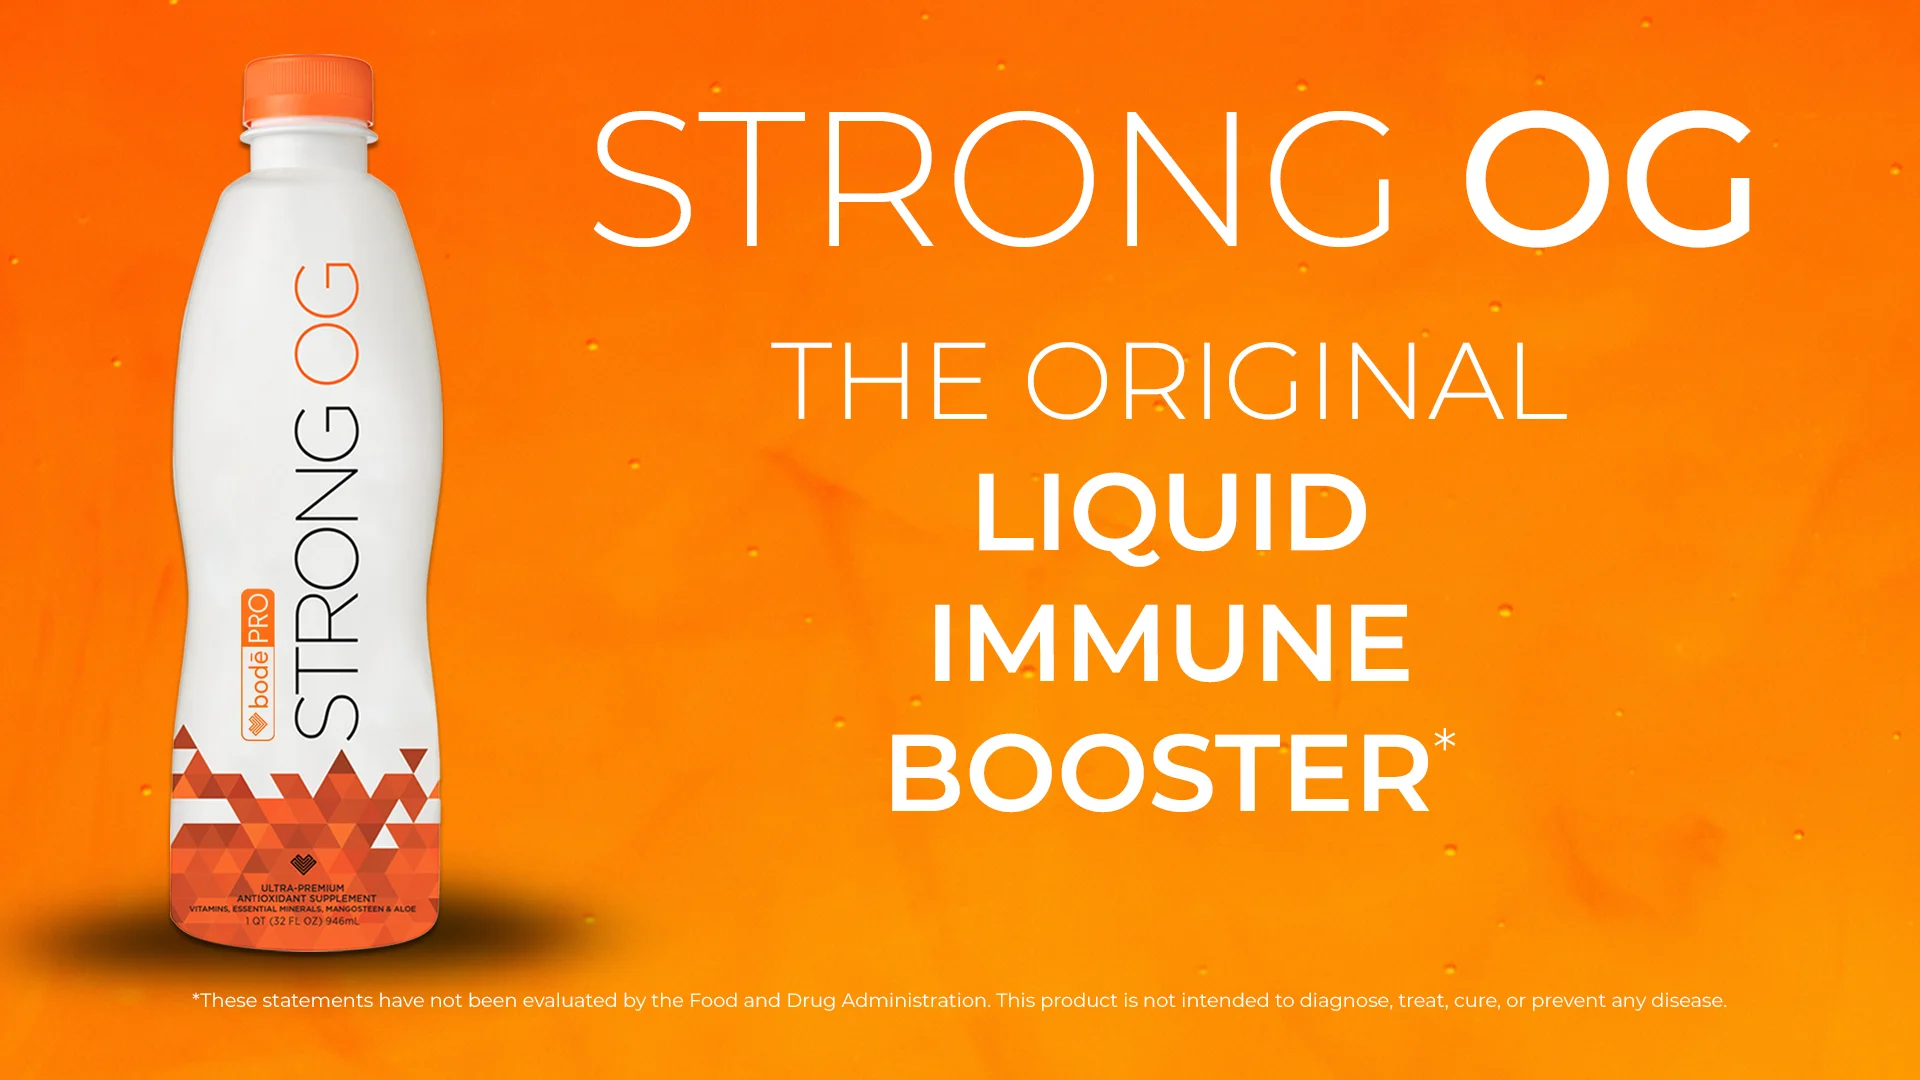 Strong OG: The Original Liquid Immune Booster